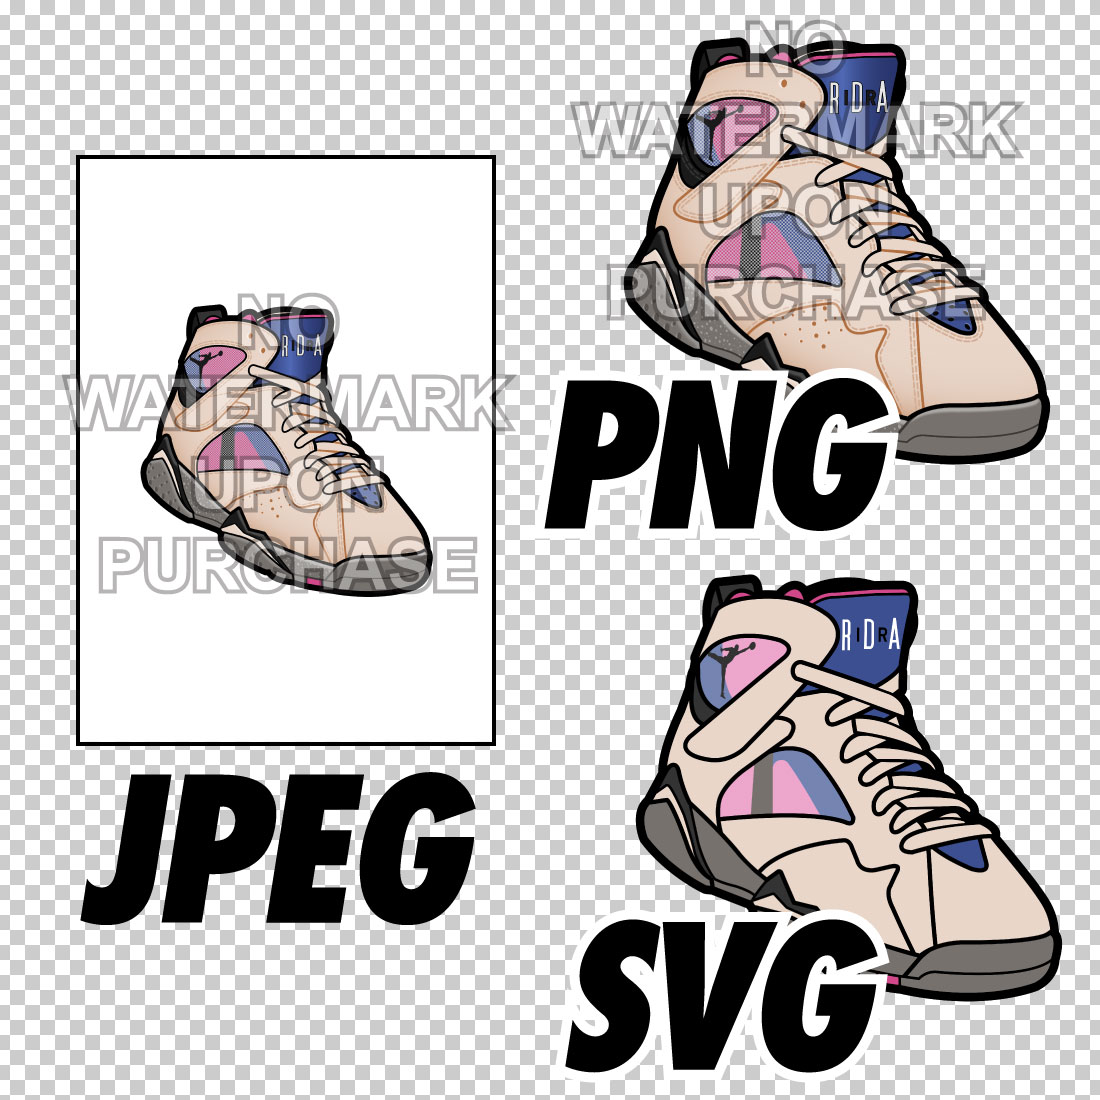 Air Jordan 7 Sapphire JPEG PNG SVG right & left shoe bundle digital download preview image.